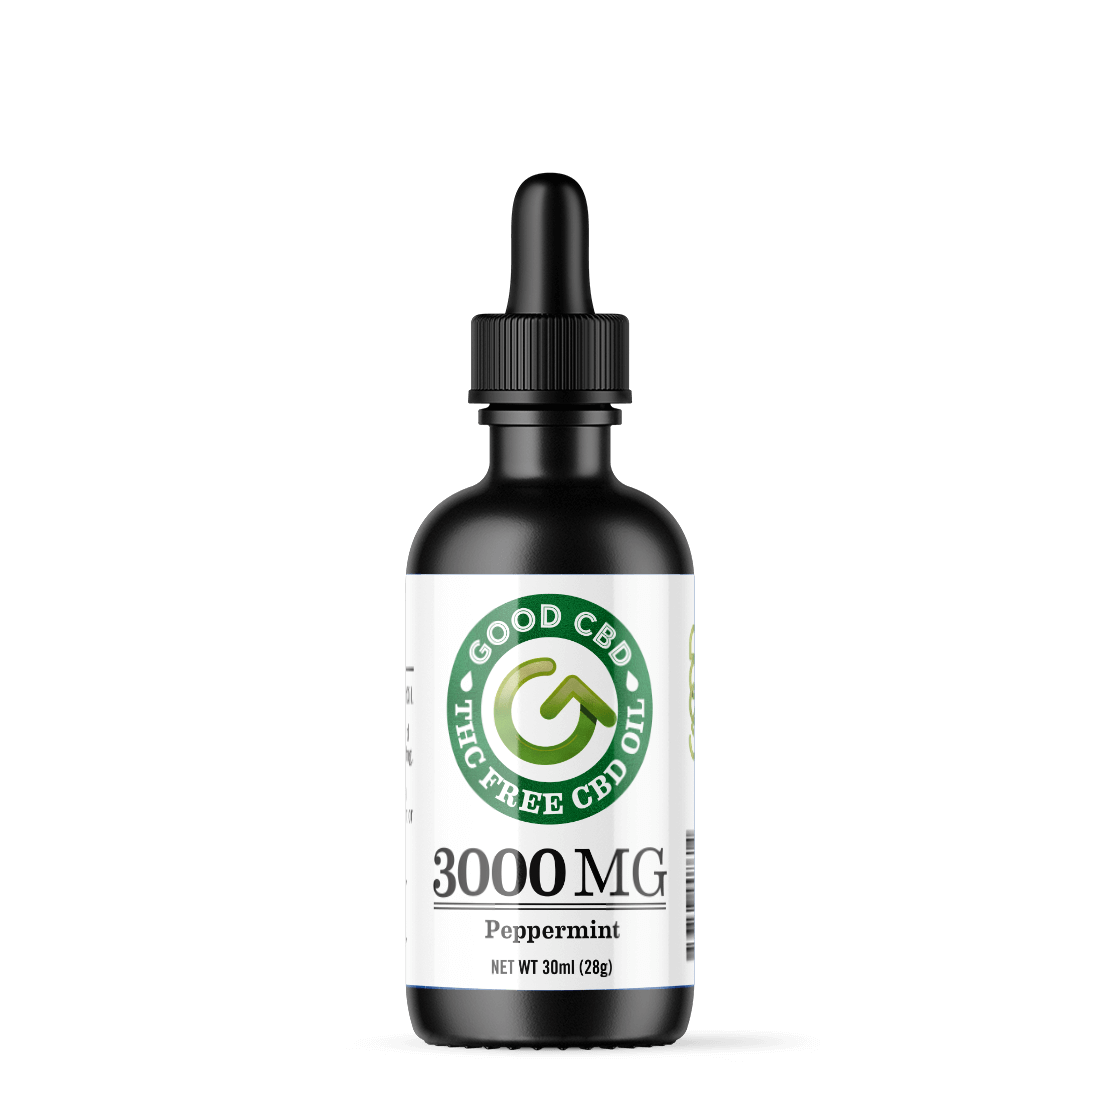 3000mg CBD Oil with no THC, peppermint flavor CBD oil - Good CBD Online Store